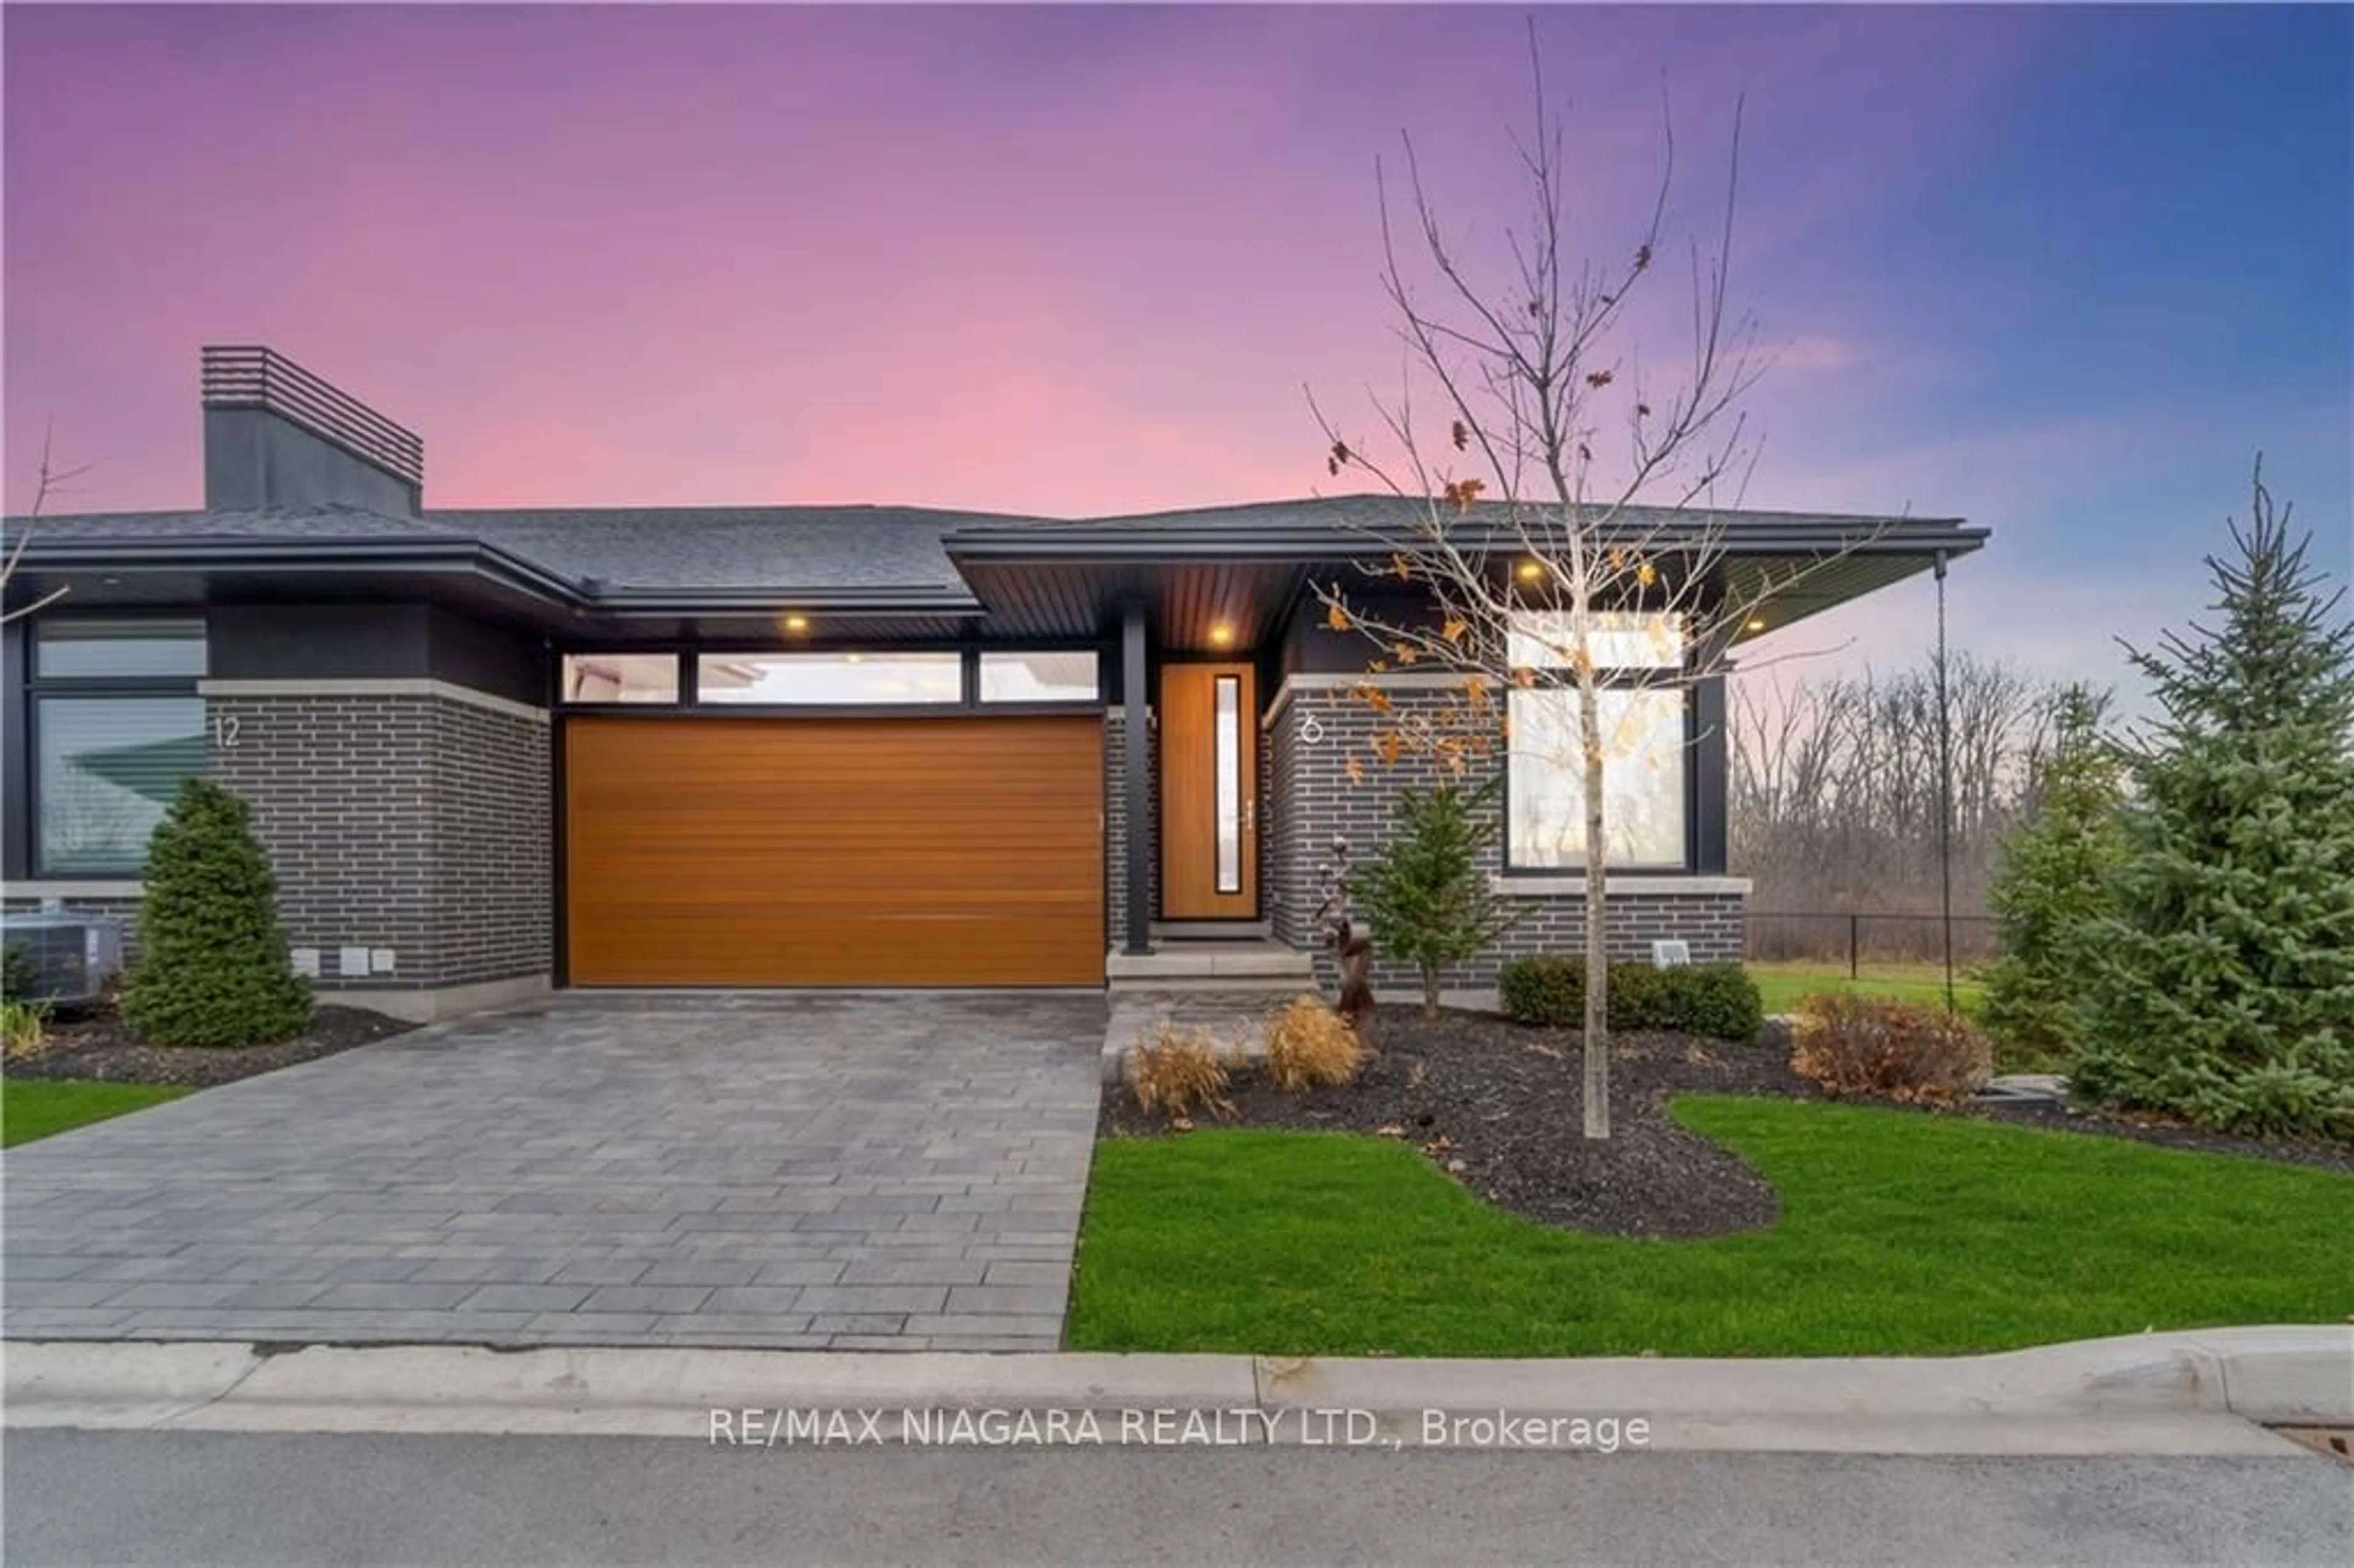 Home with brick exterior material for 6 Juniper Tr #11, Welland Ontario L3C 0H5